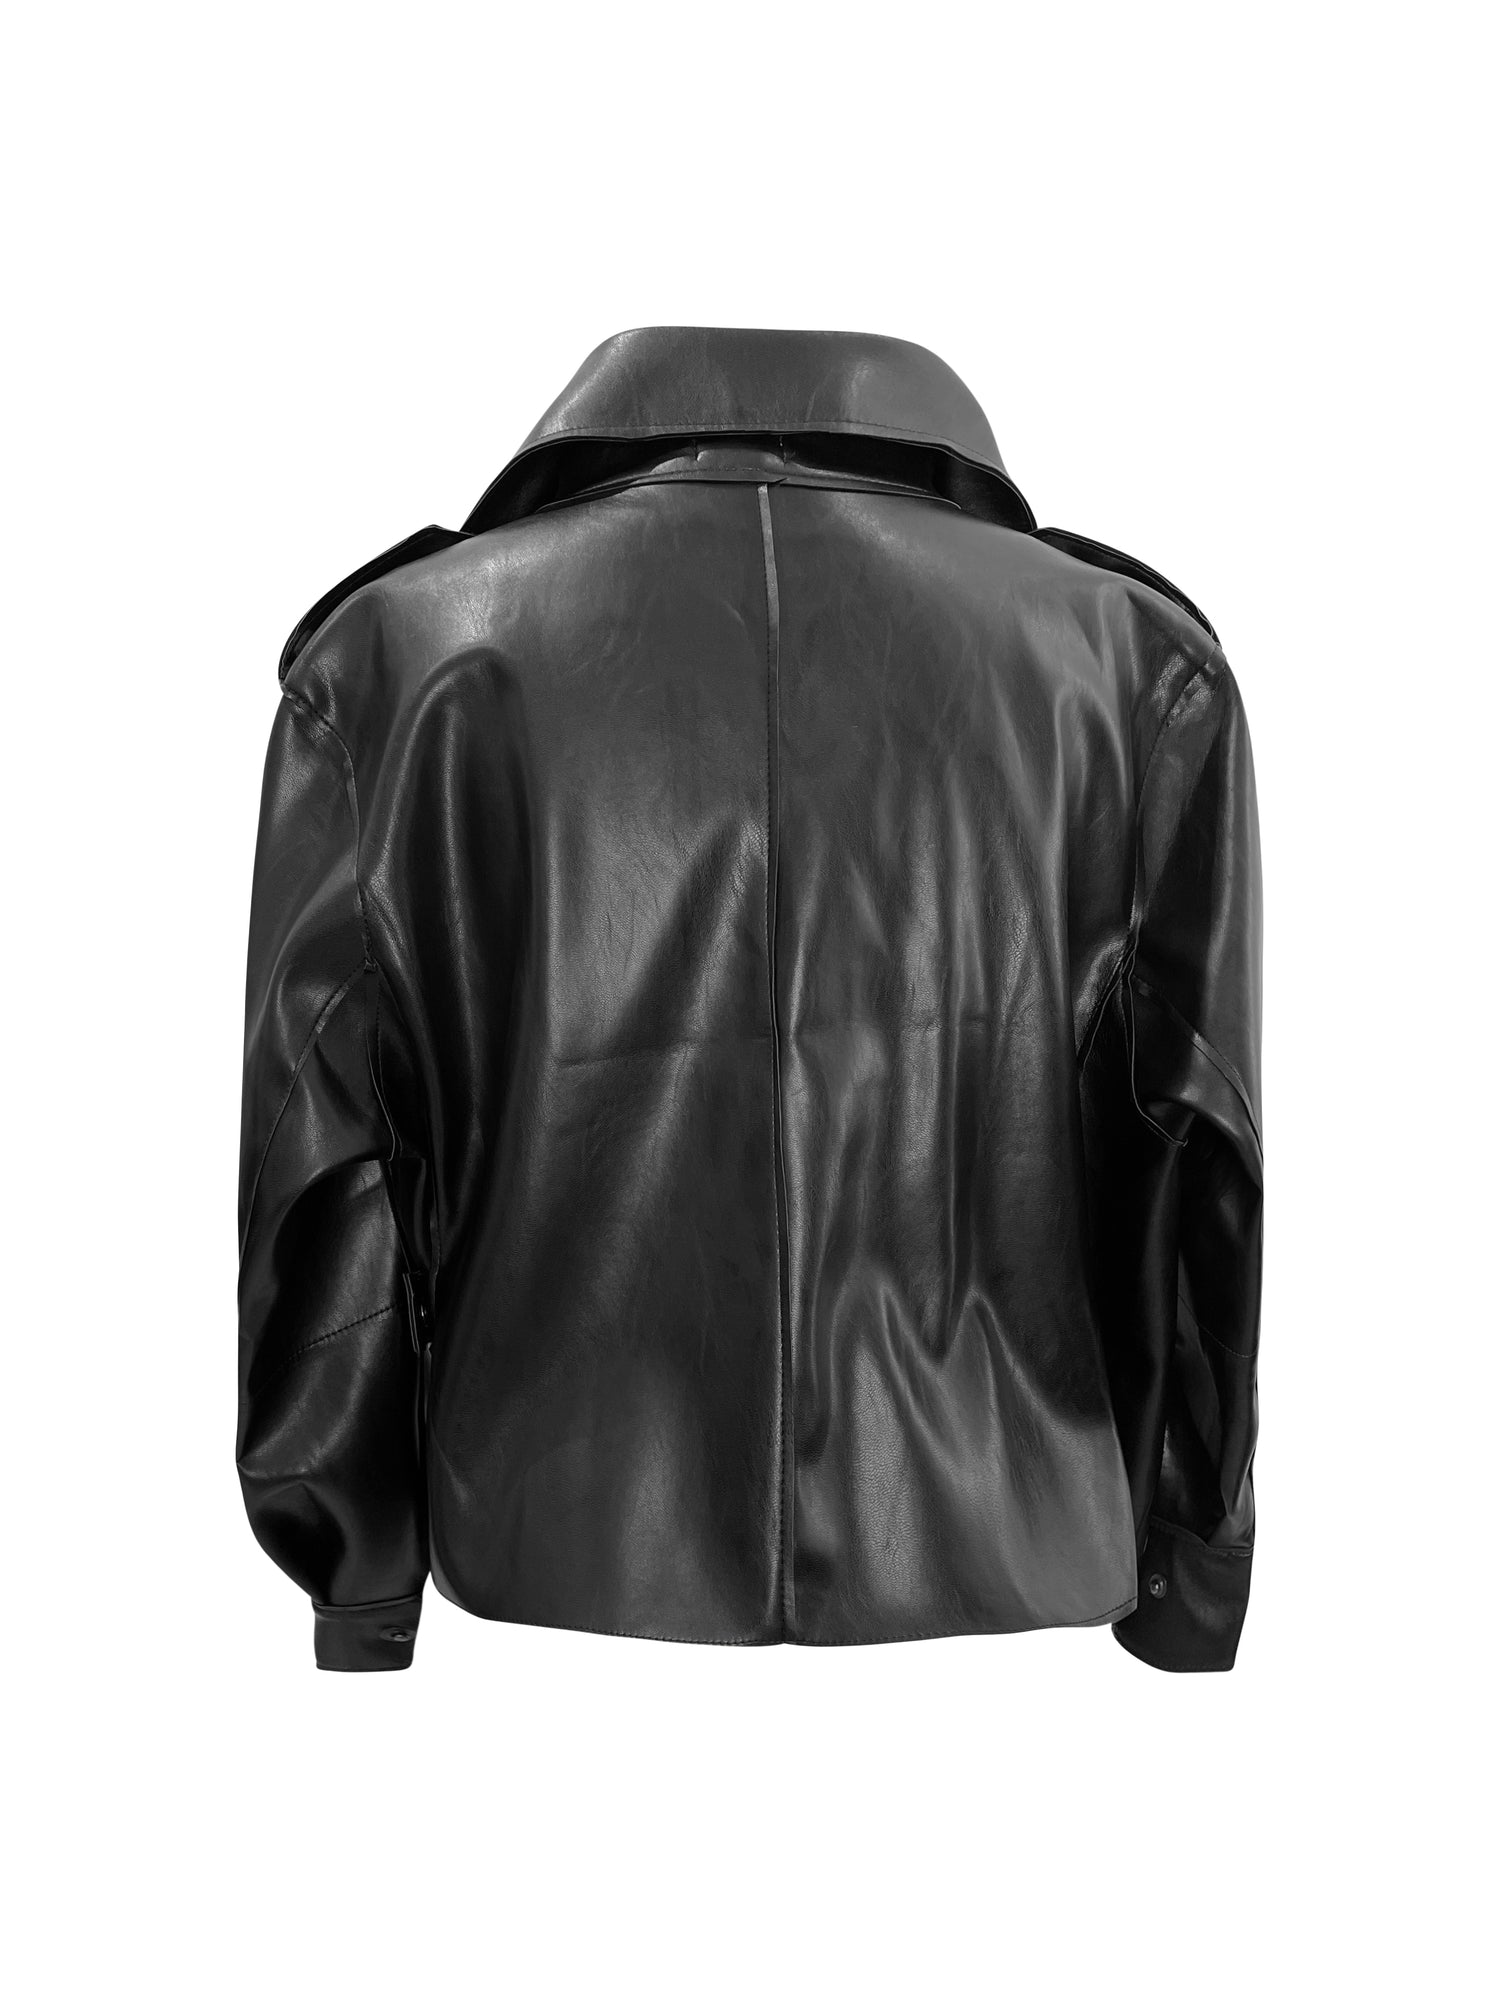 vegan leather jacket